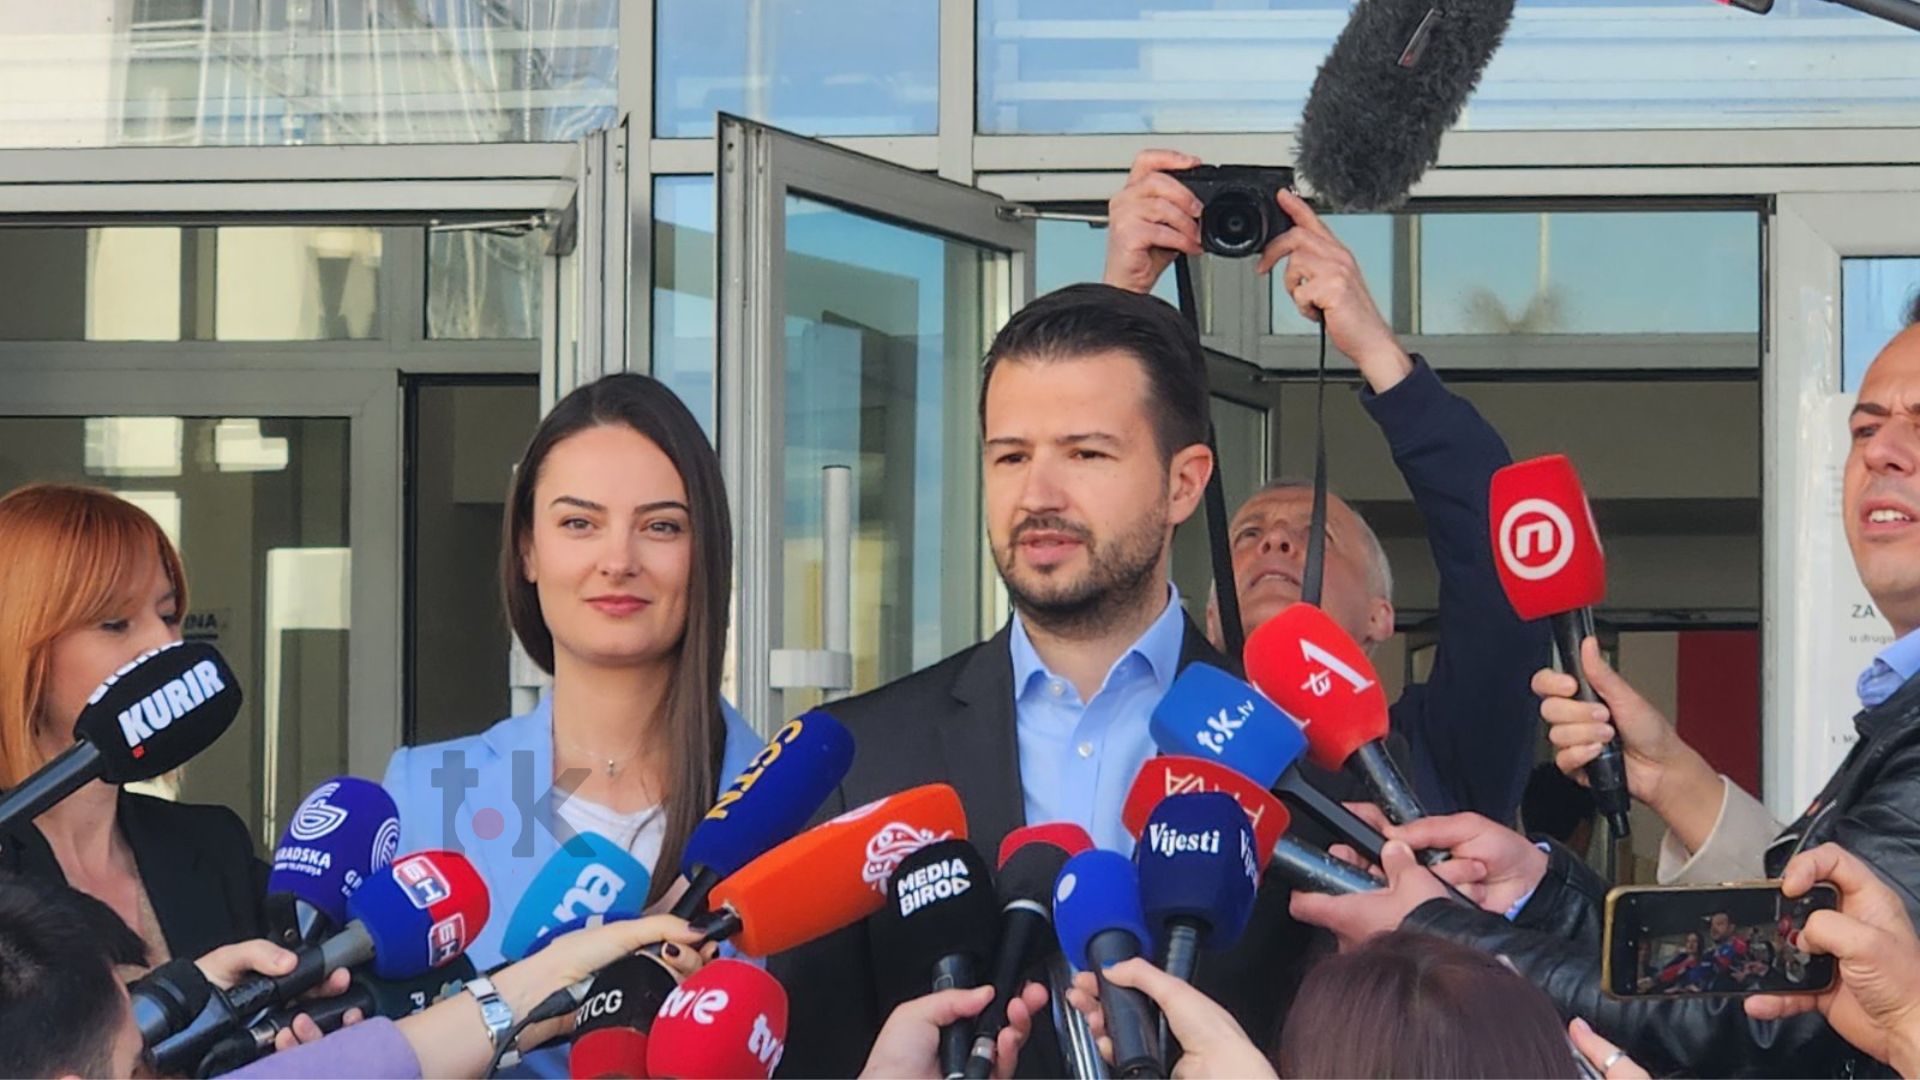 Milatović: Na Spajiću odgovornost da formira proevropsku vladu